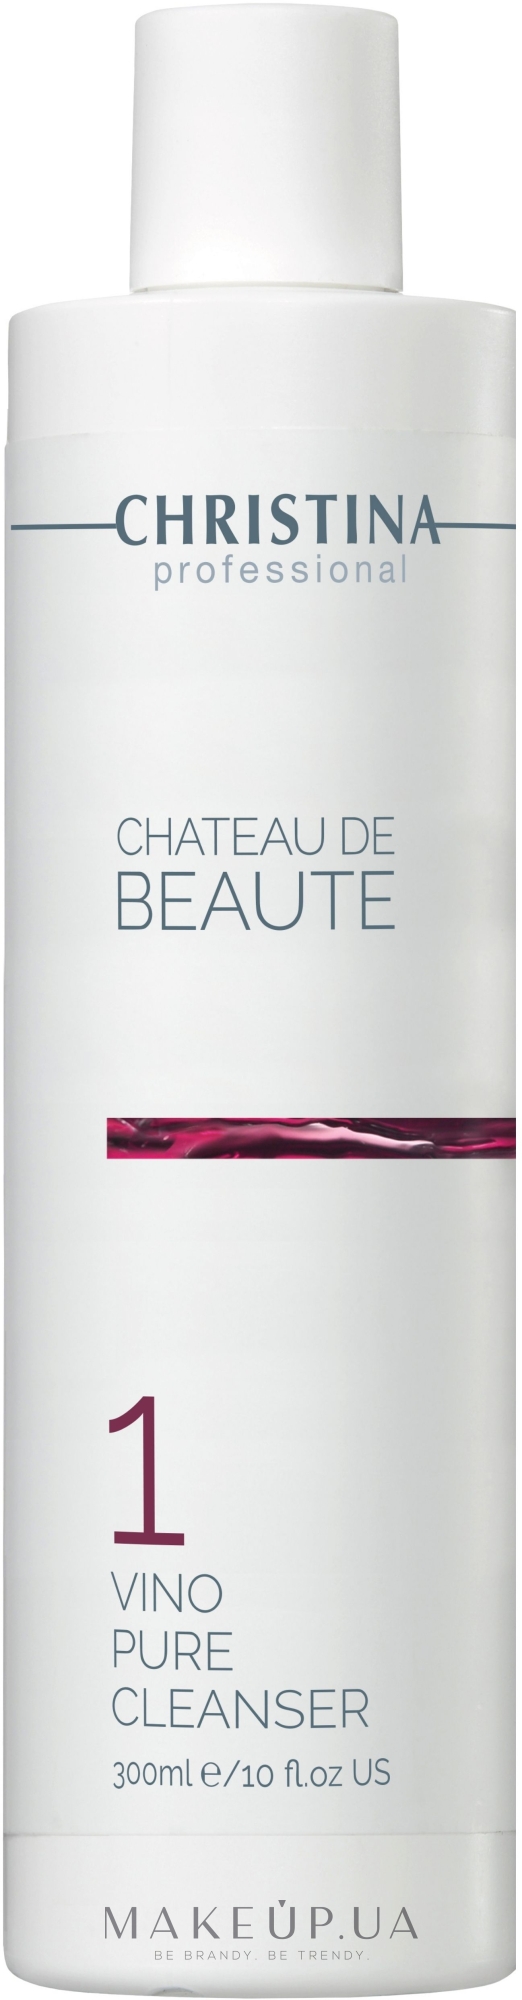 Очищающий гель (шаг 1) - Christina Chateau de Beaute Vino Pure Cleanser — фото 300ml